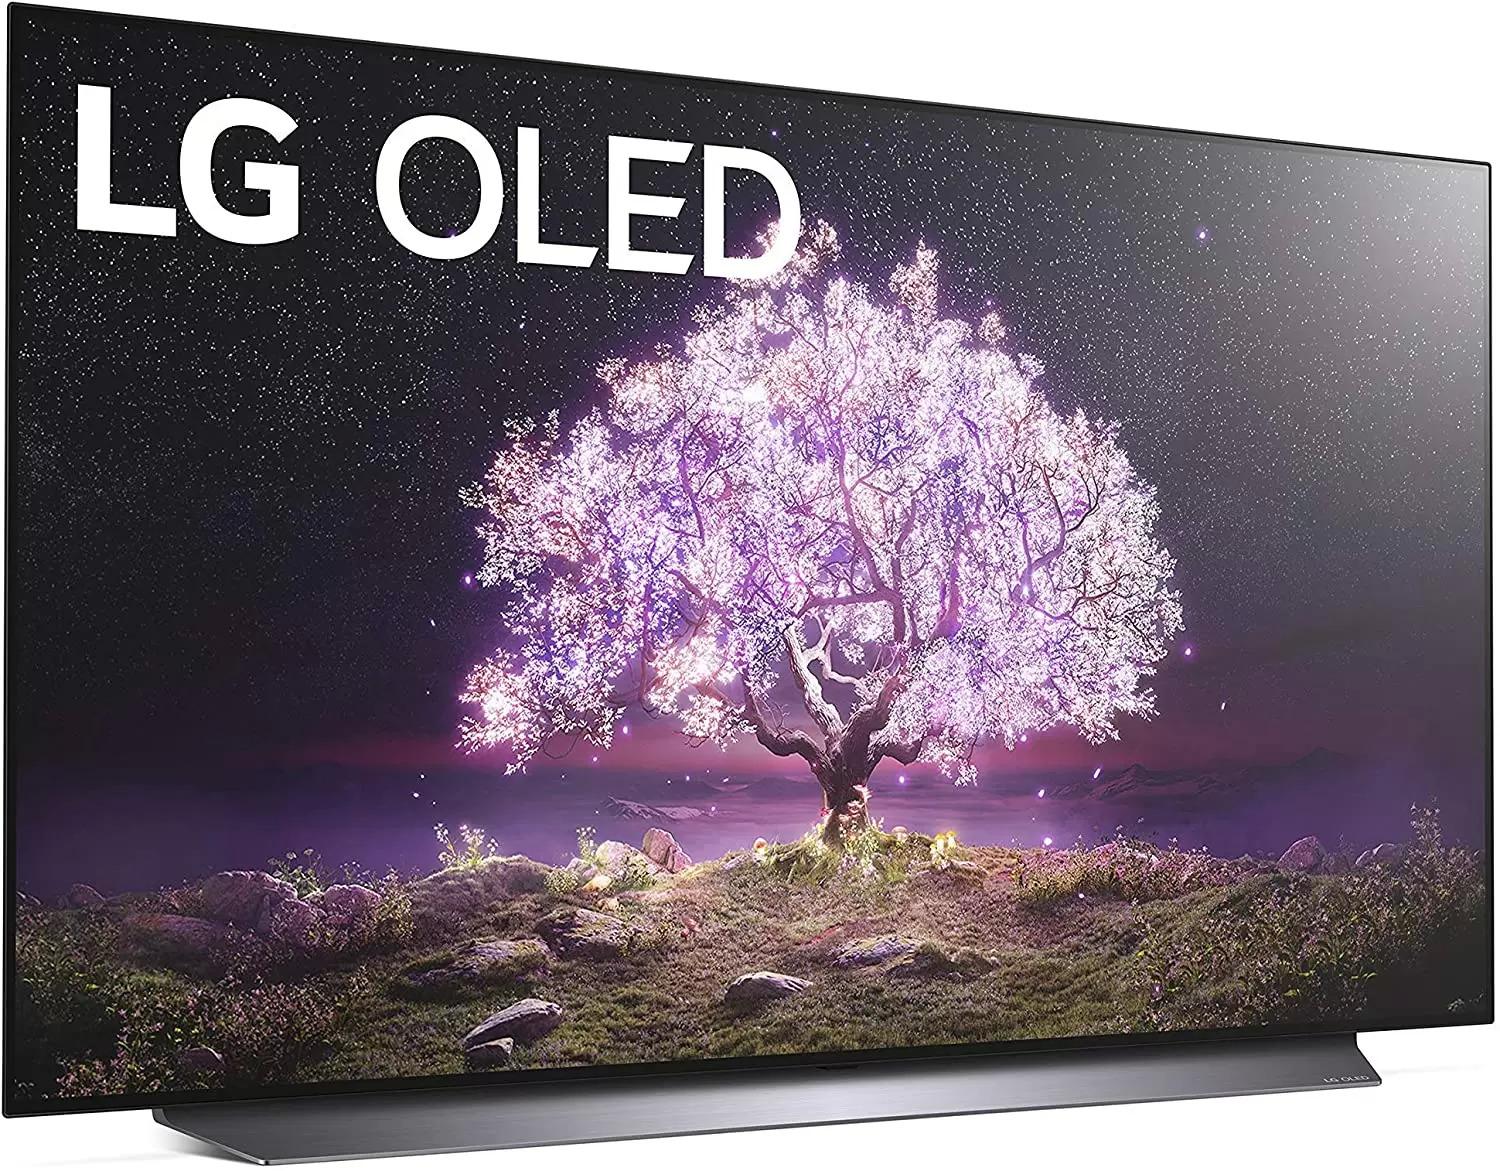 65in LG OLED65C1PUB 4K Smart OLED TV for $1649.99 Shipped